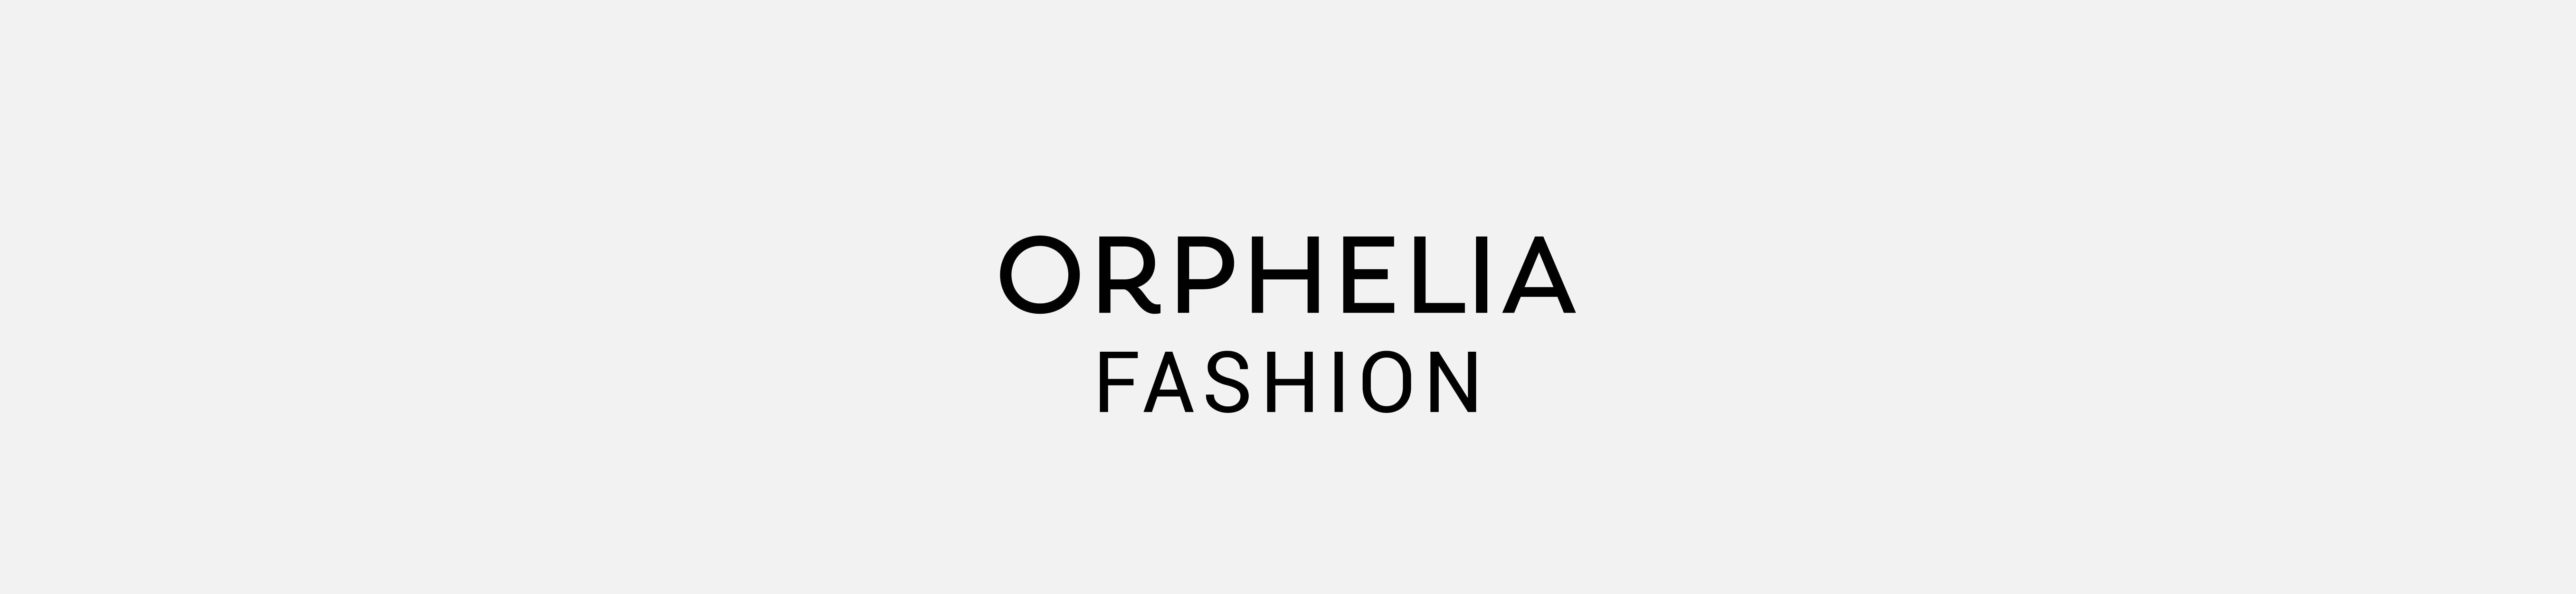 Orphelia Fashion